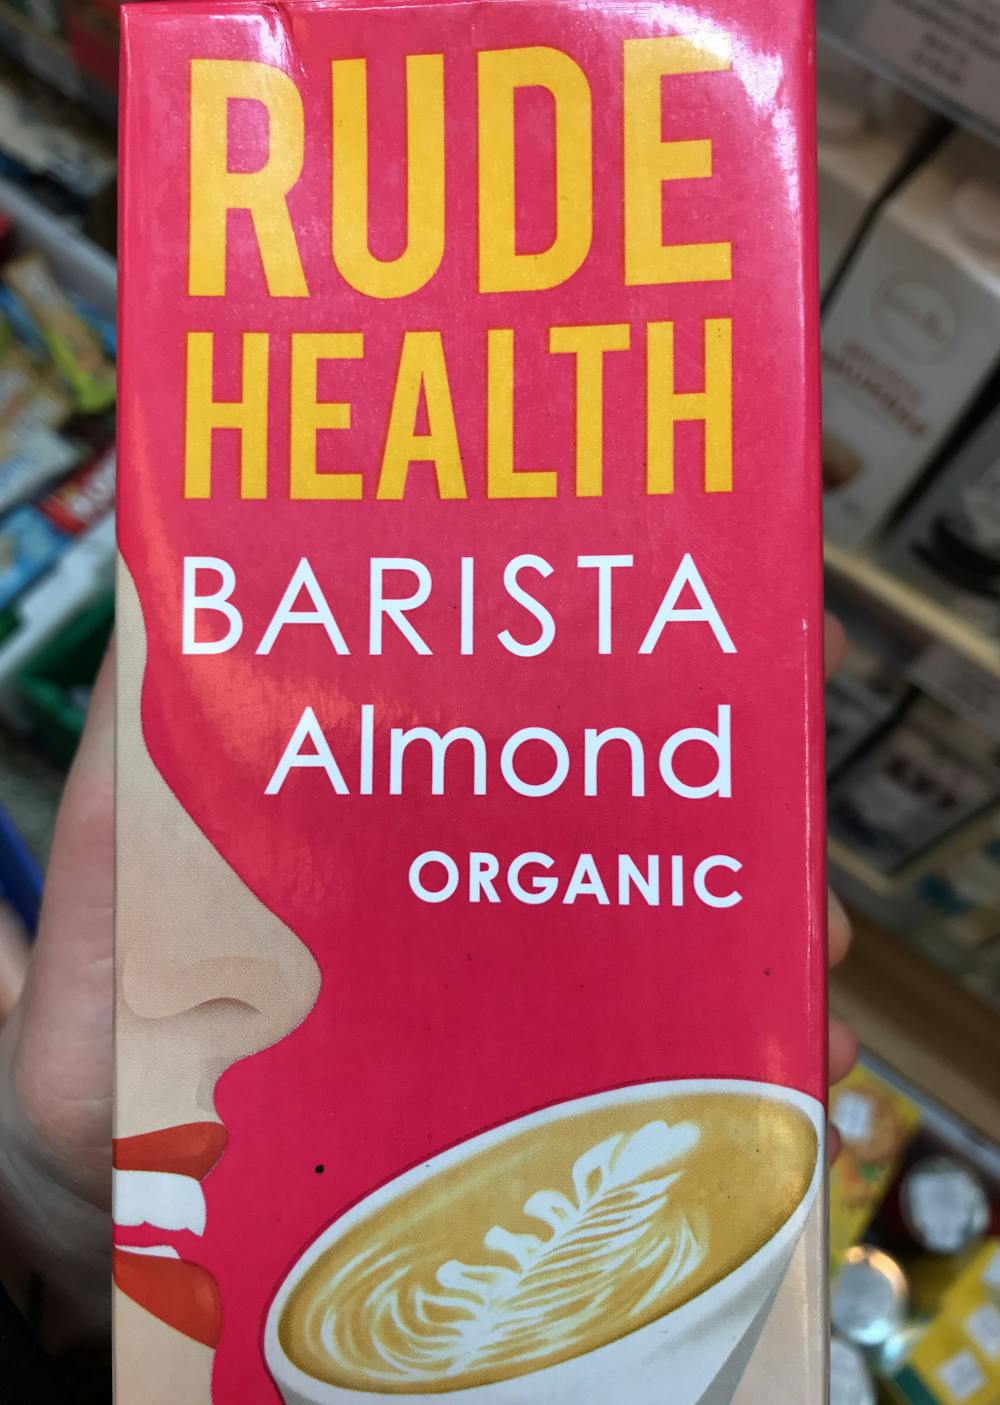 Barista almond organic, Rude health